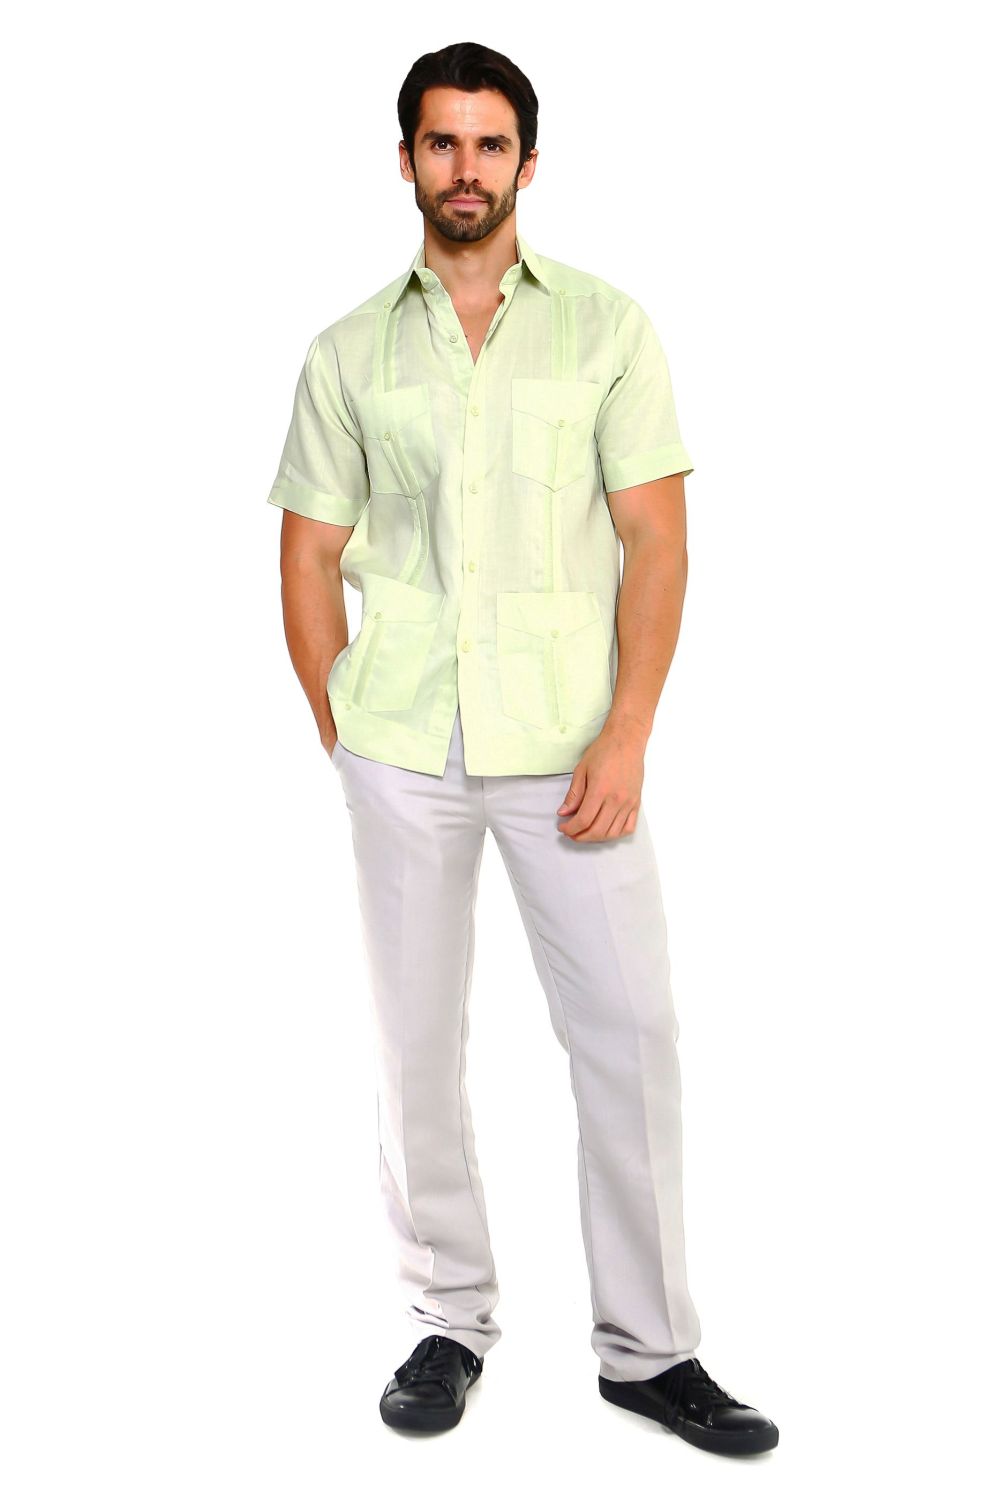 Mojito Collection Big Size Men's Traditional Guayabera Shirt Premium 100% Linen Short Sleeve 3X-8X - Mojito Collection - Guayabera, Mens Shirt, Mojito Guayabera Shirt, Short Sleeve Linen Shir